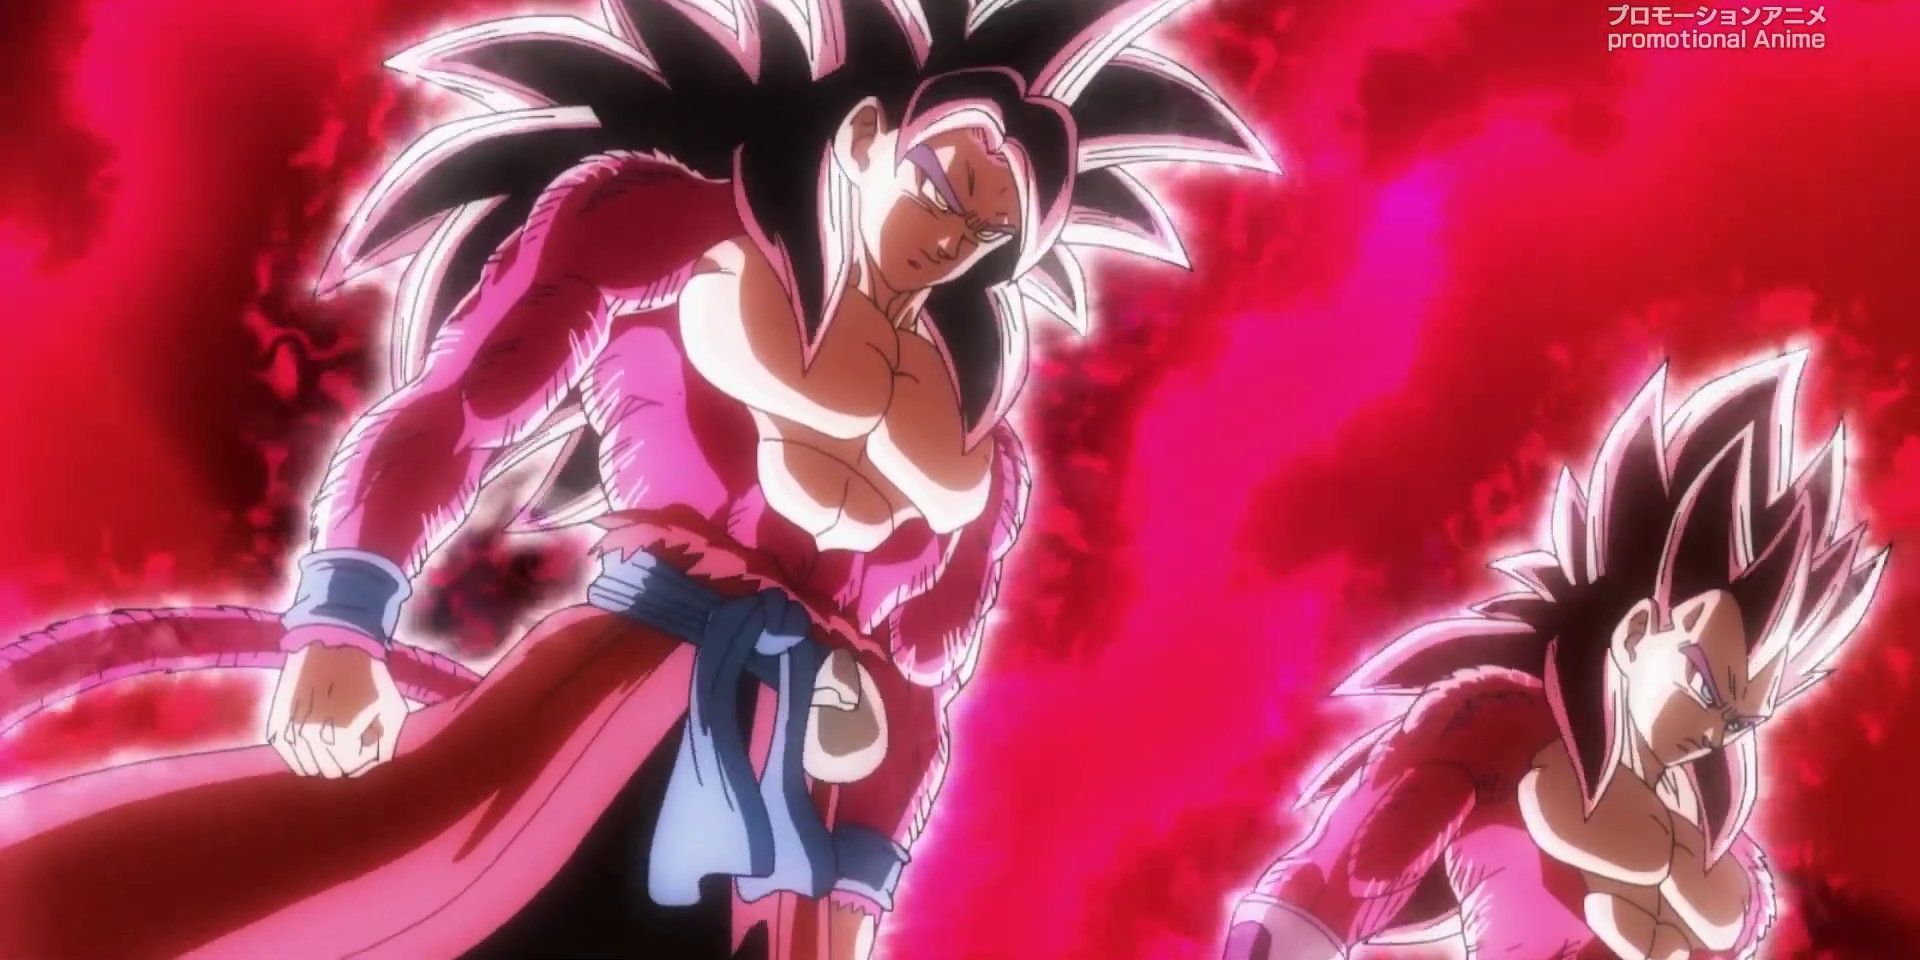 Super Full Power Saiyan 4 Limit Breaker Xeno Goku and Xeno Vegeta in Super Dragon Ball Heroes.